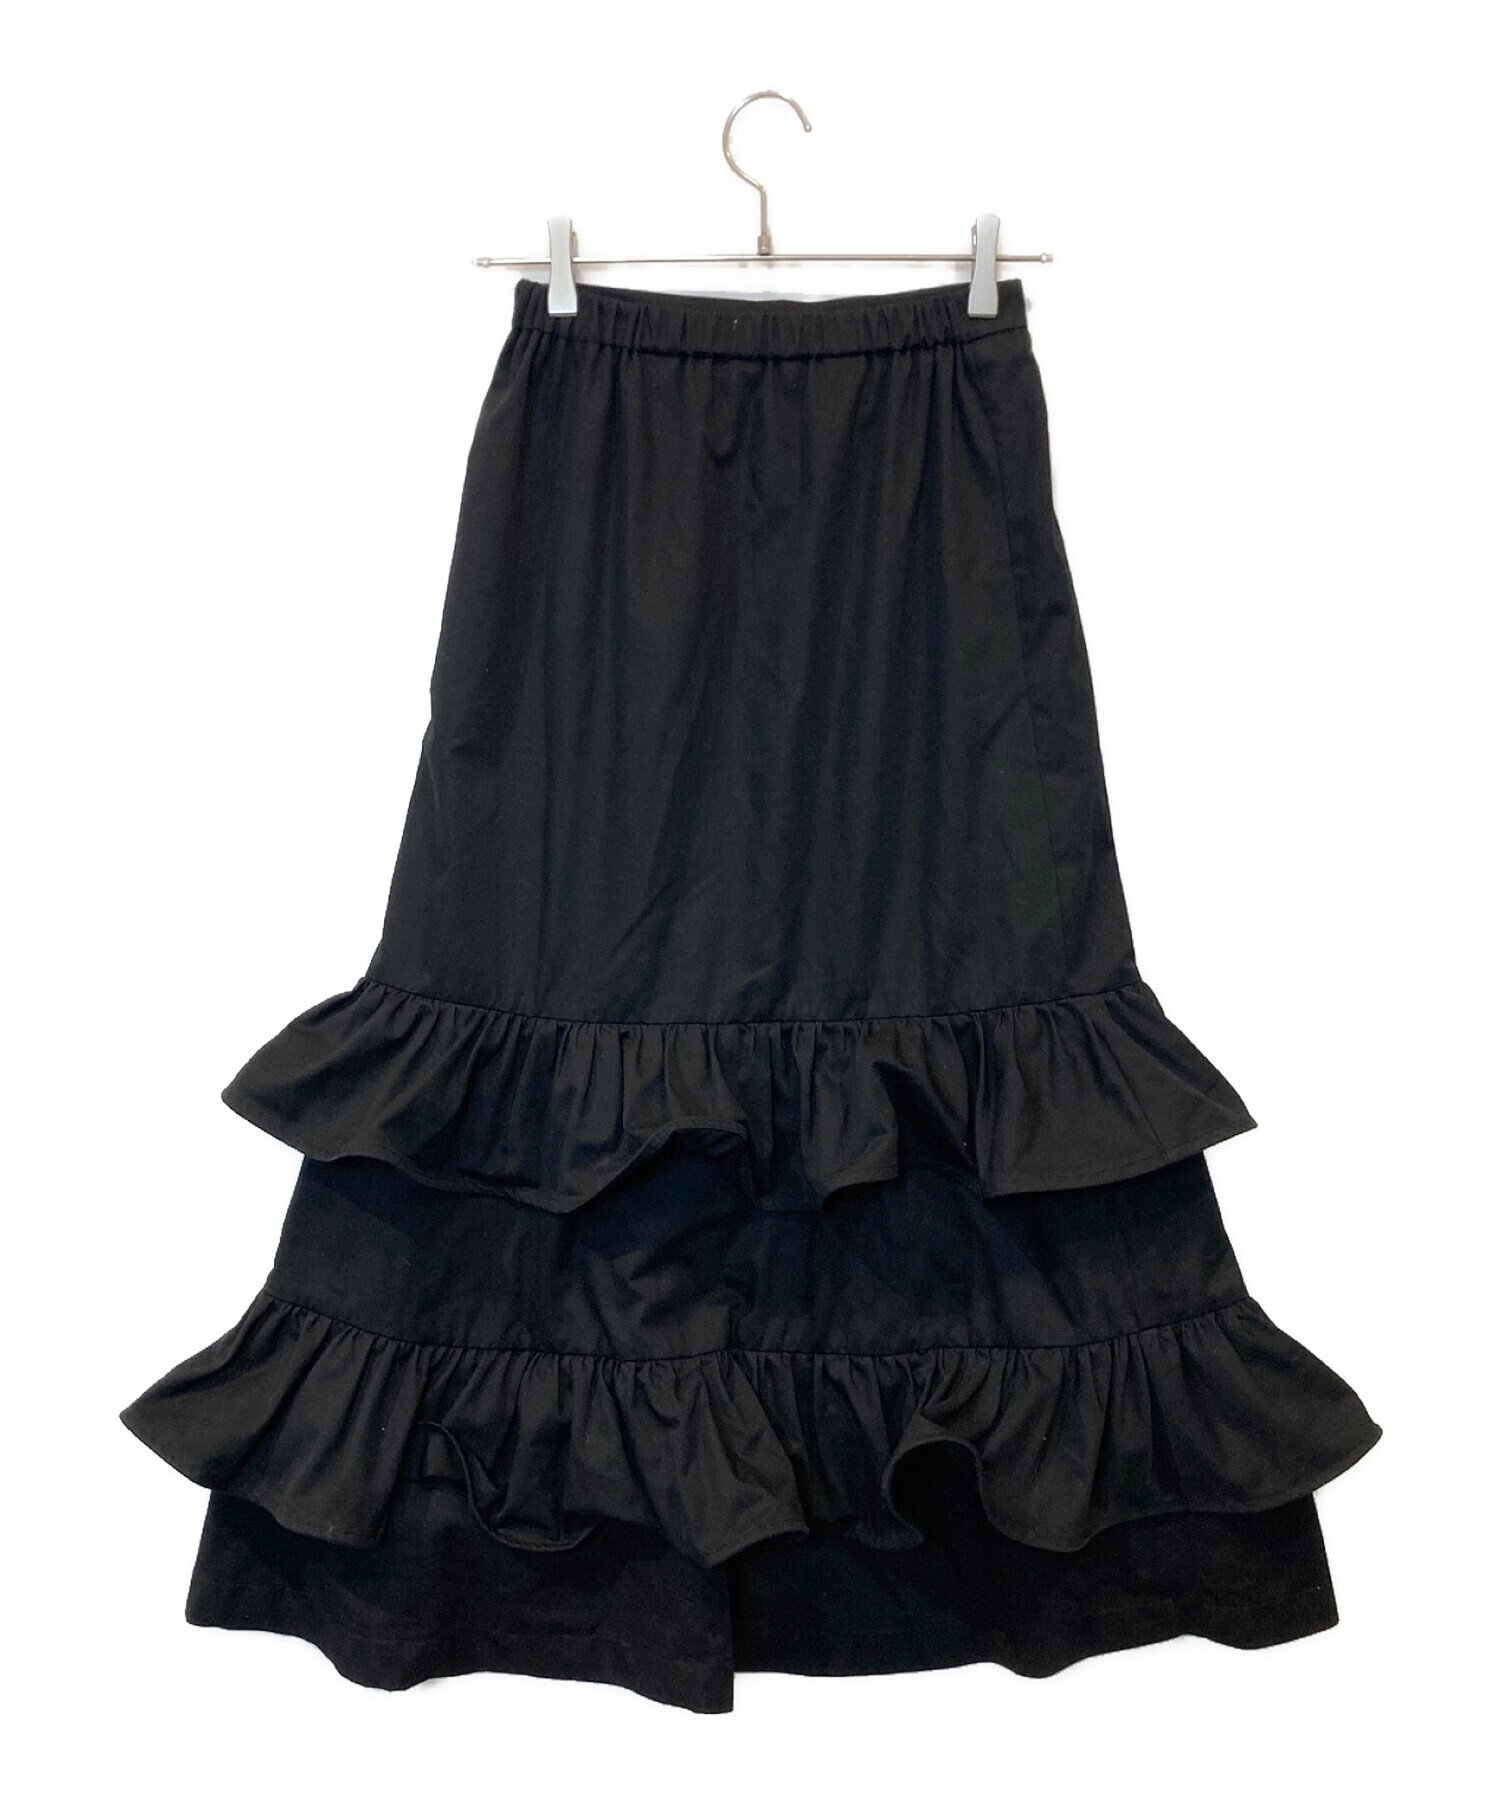 Honey mi Honey (ハニーミーハニー) wire frill cotton long skirt / フリルスカート ブラック  サイズ:FREE